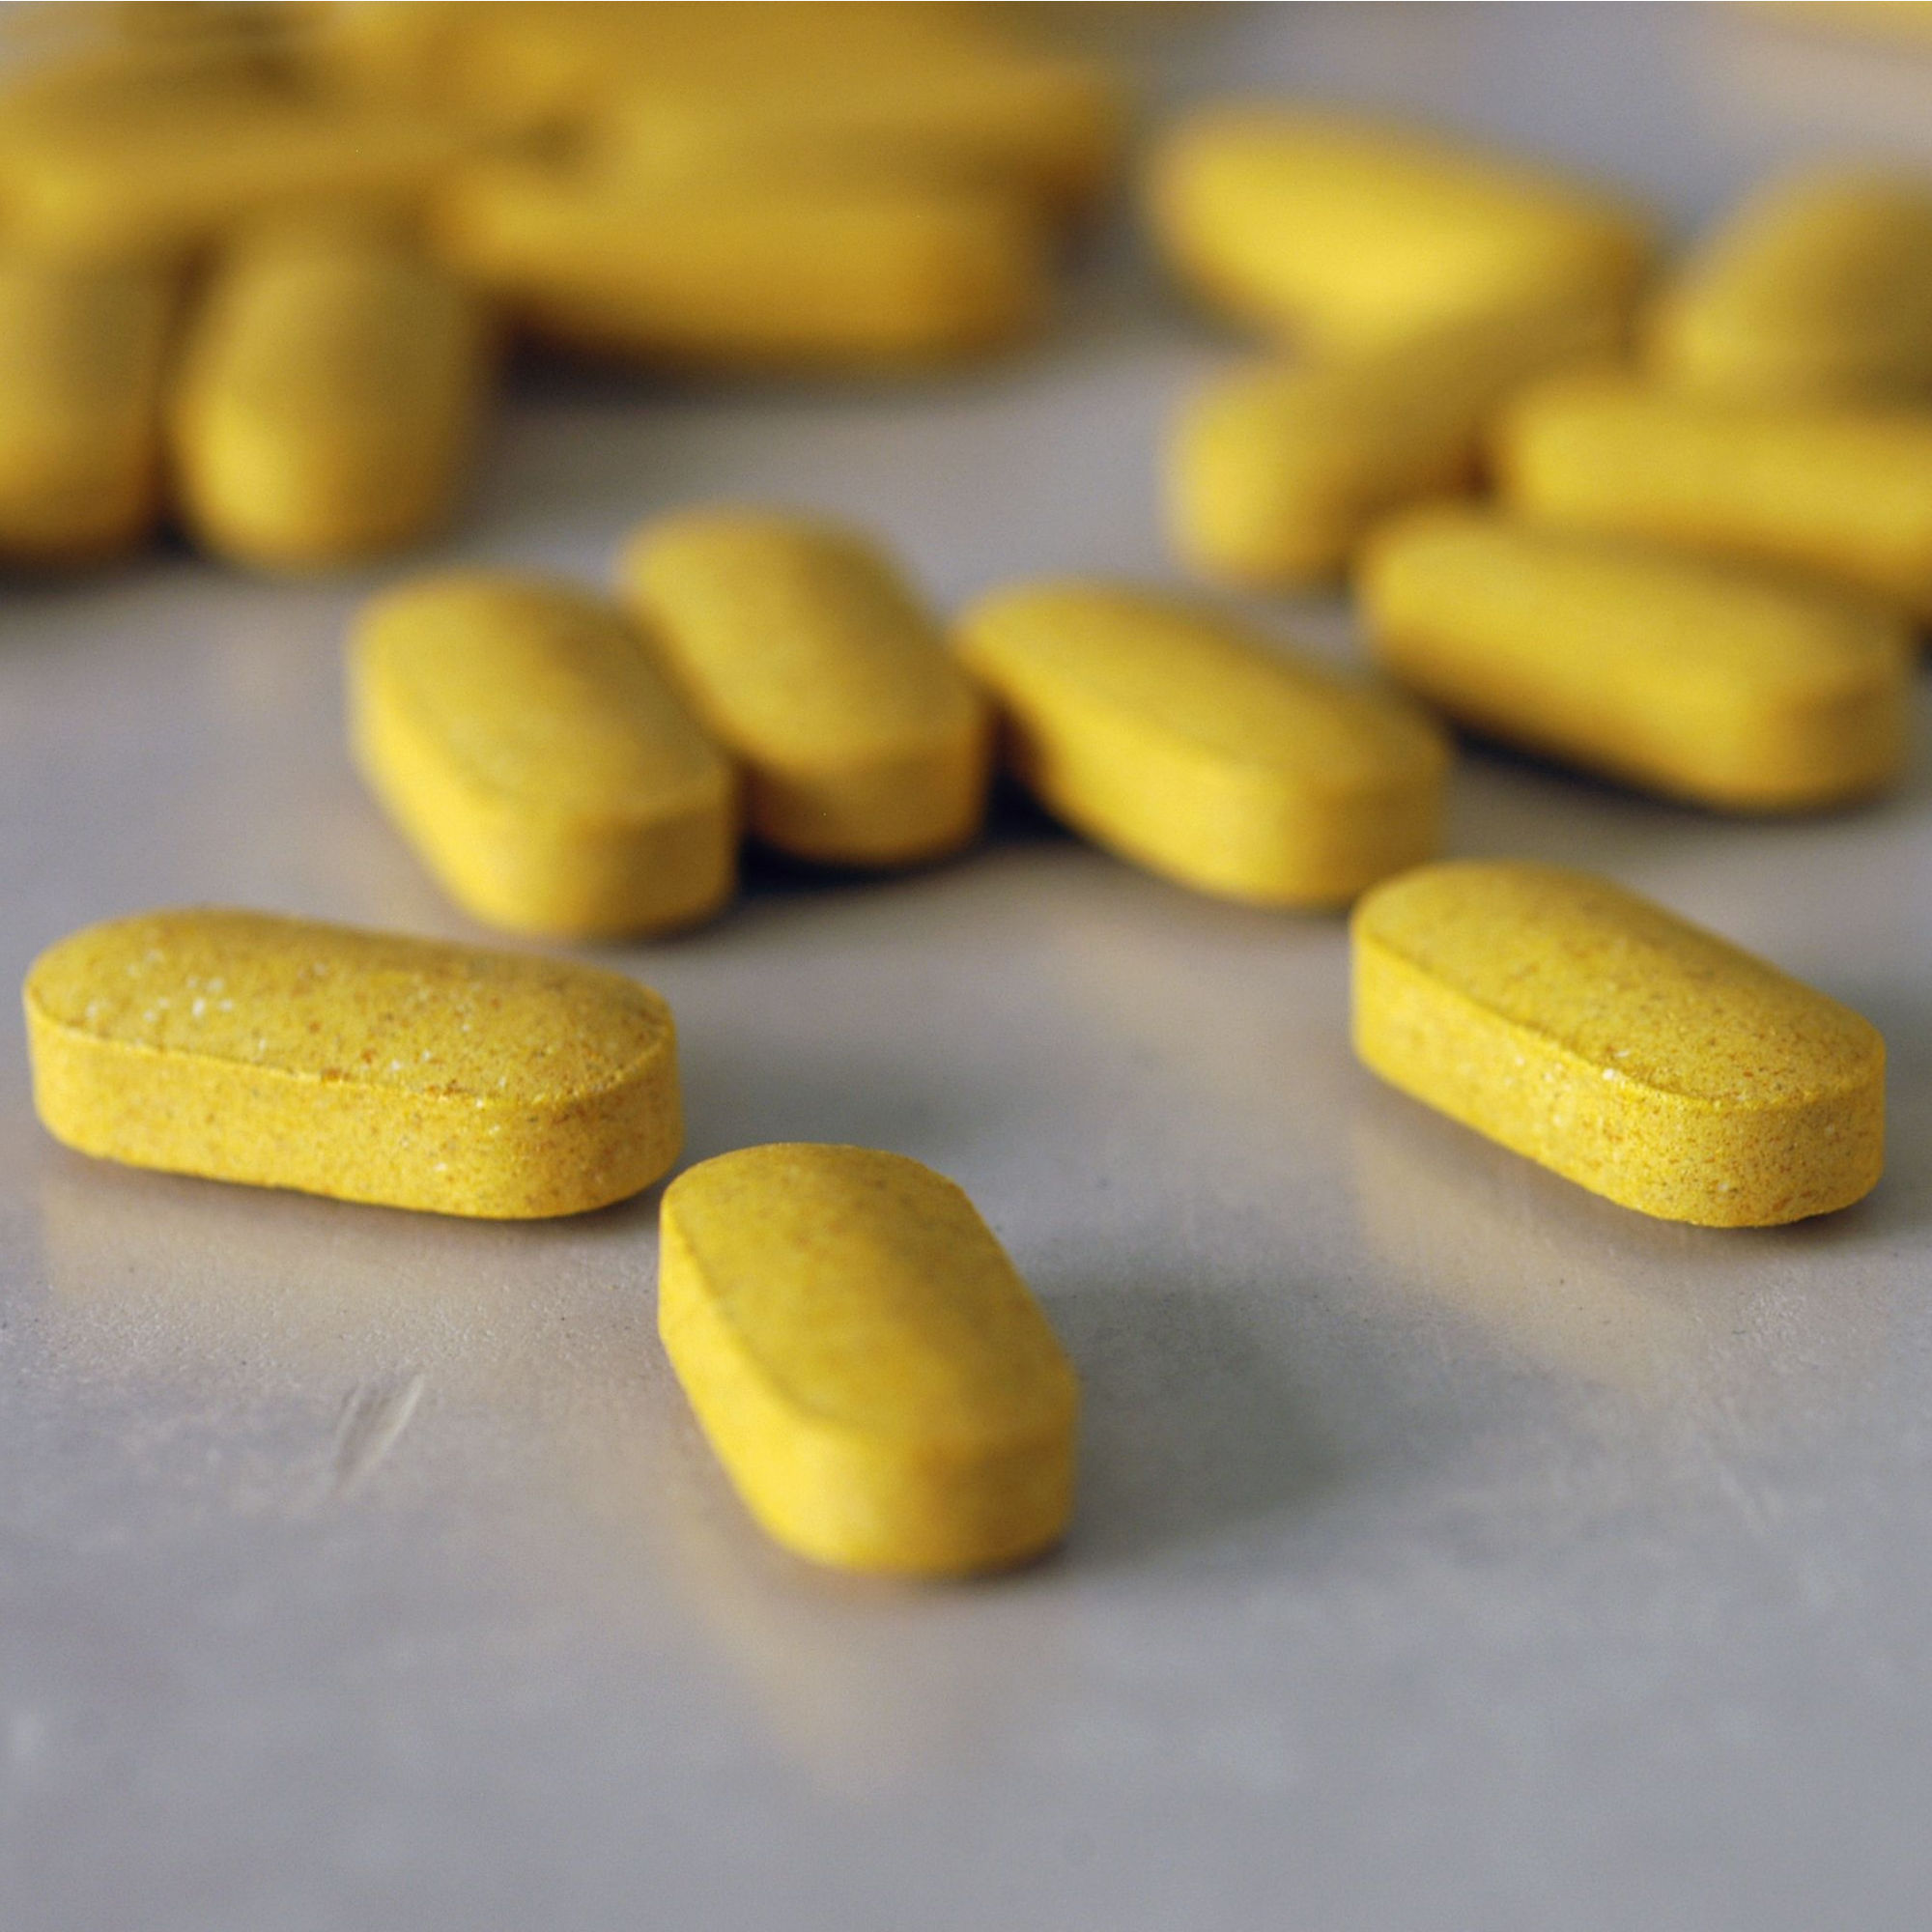 yellow niacin pills